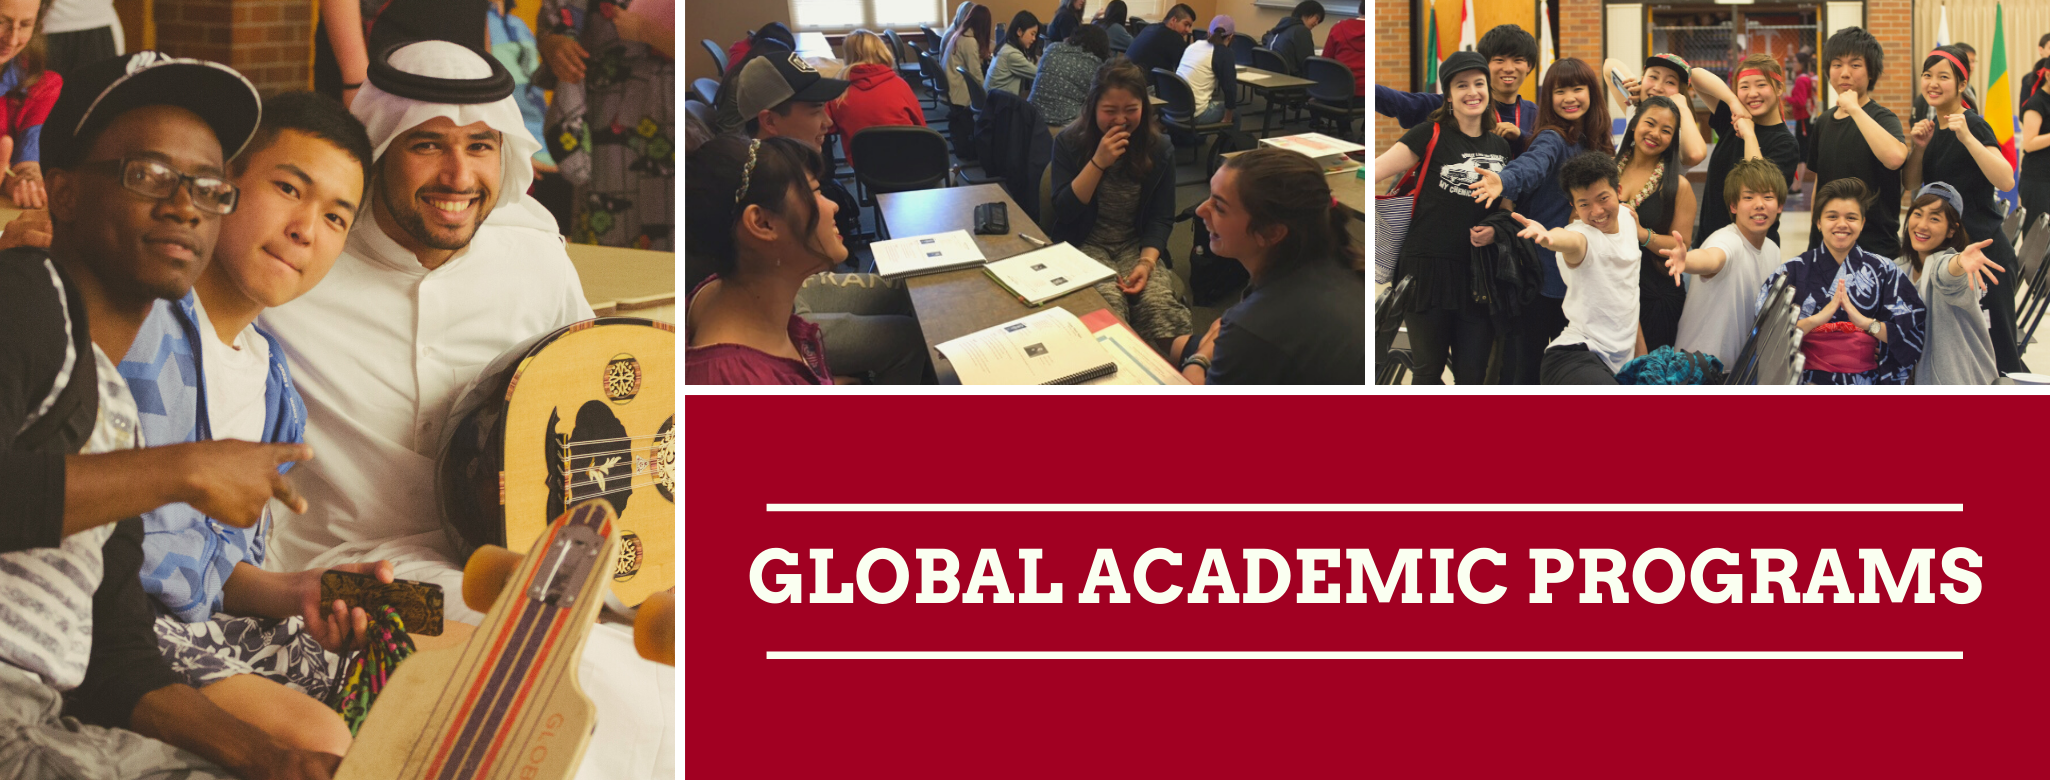 Global Academic Programs